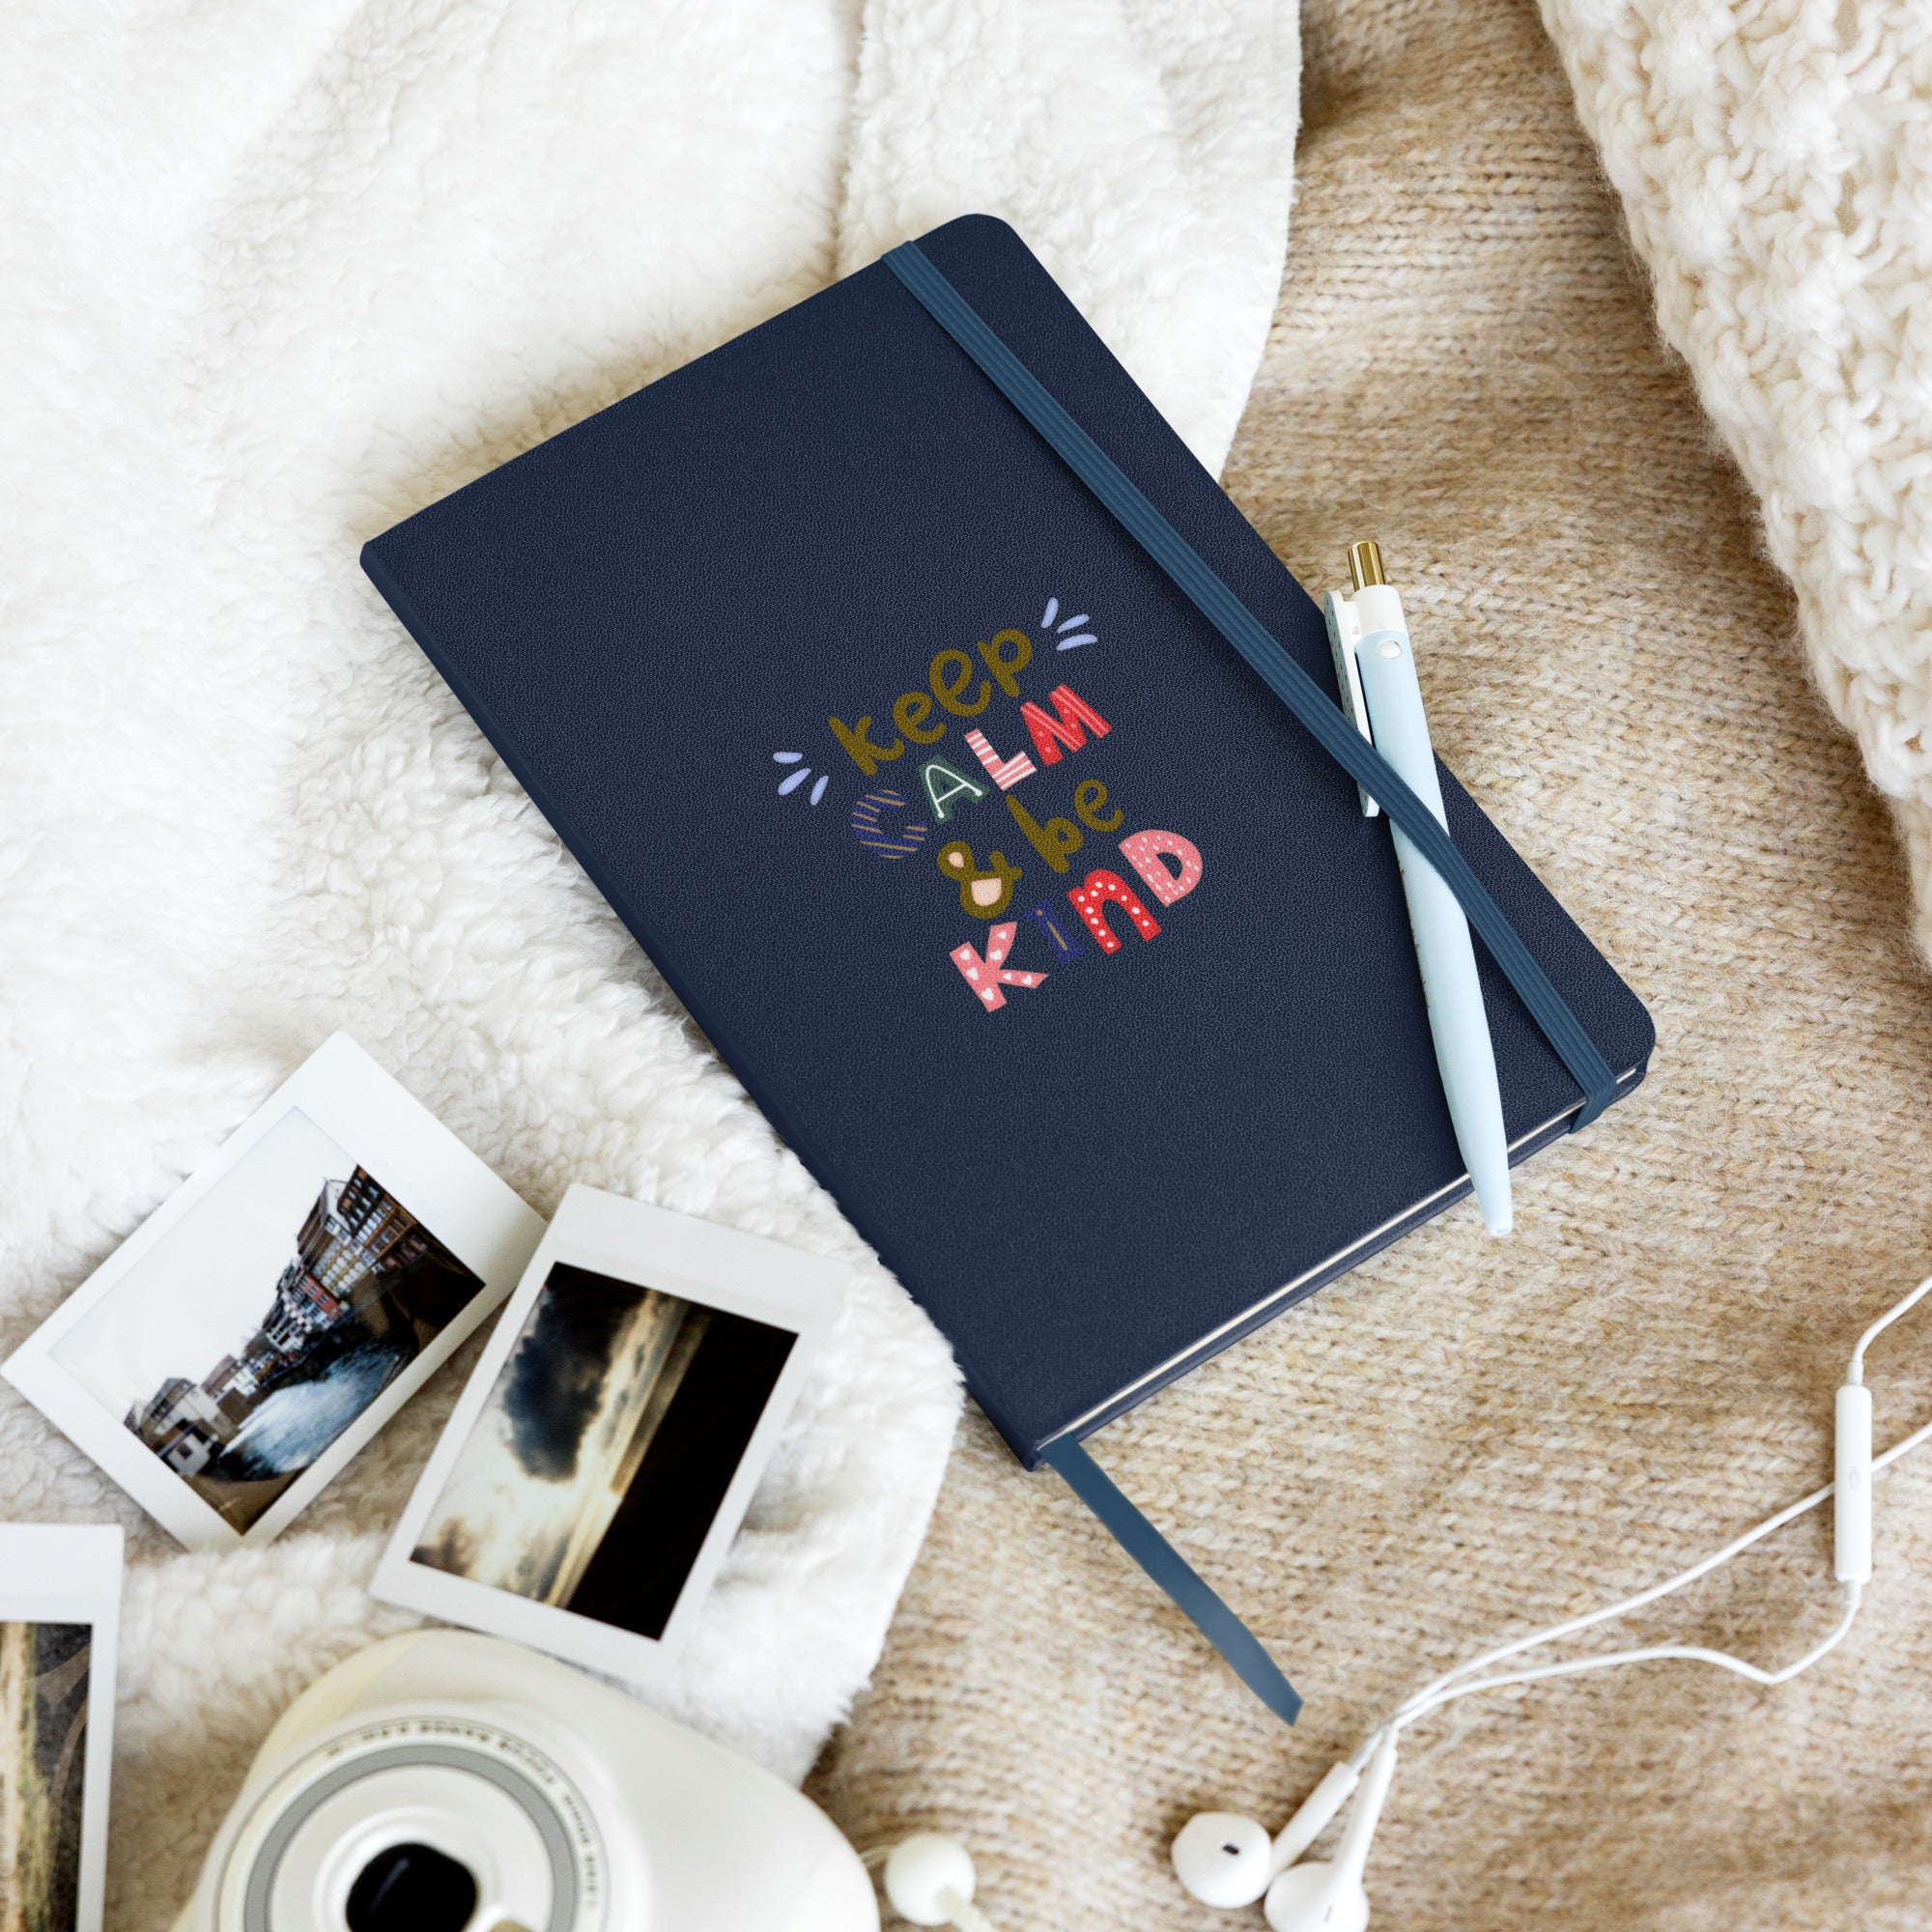 KCBK - Hardcover Bound Notebook